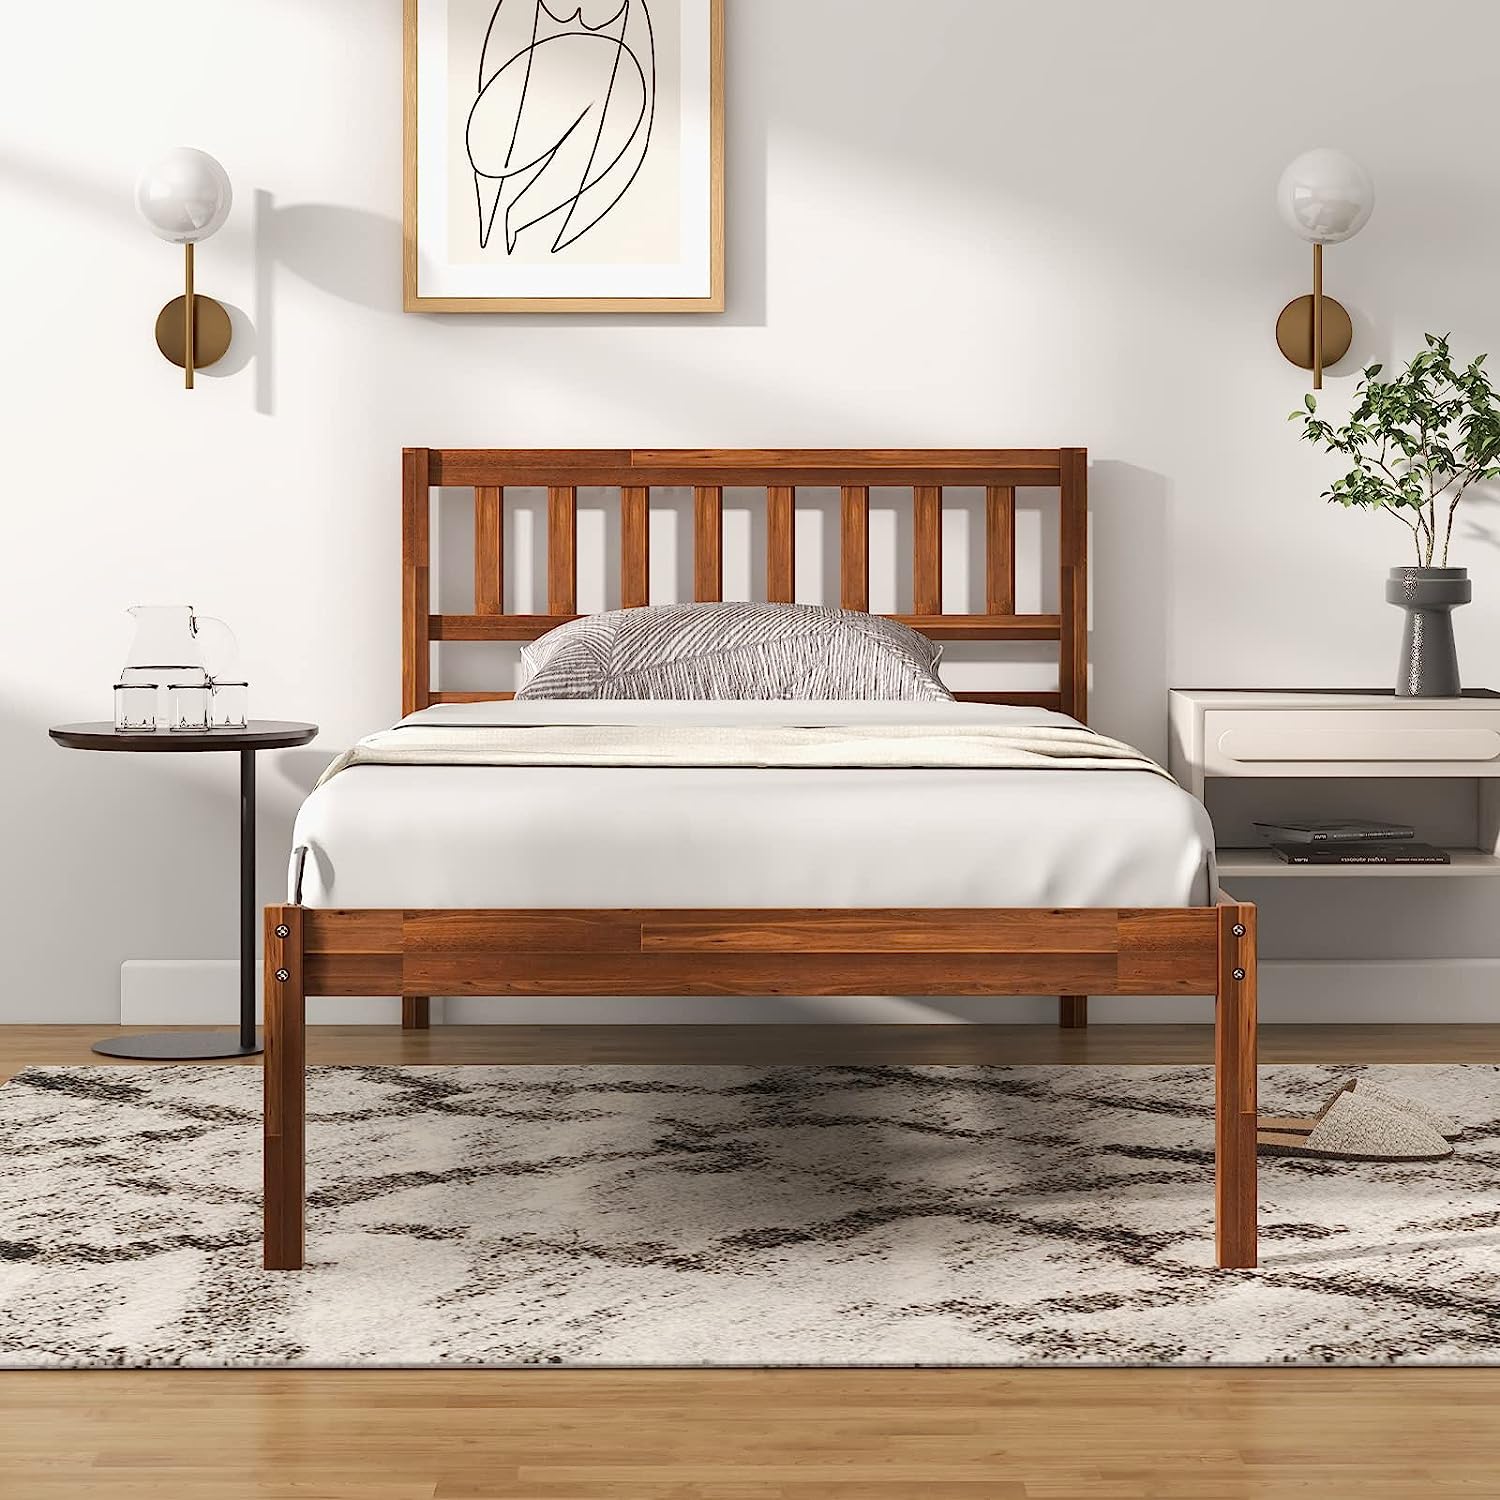 Giantex Wood Bed Frame with Headboard